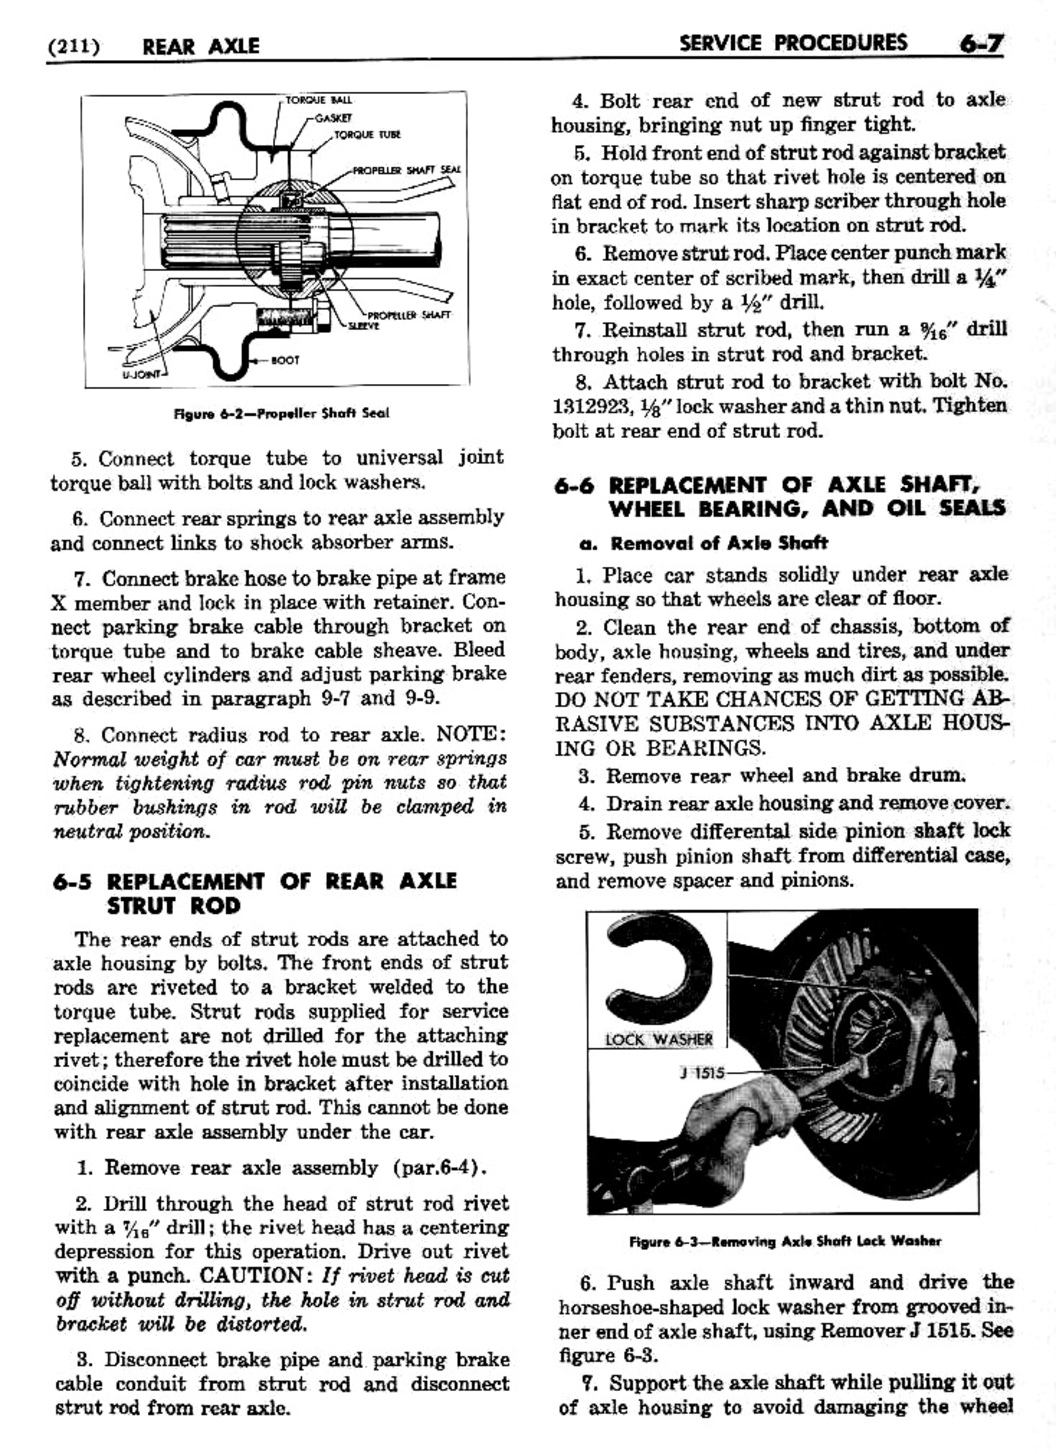 n_07 1955 Buick Shop Manual - Rear Axle-007-007.jpg